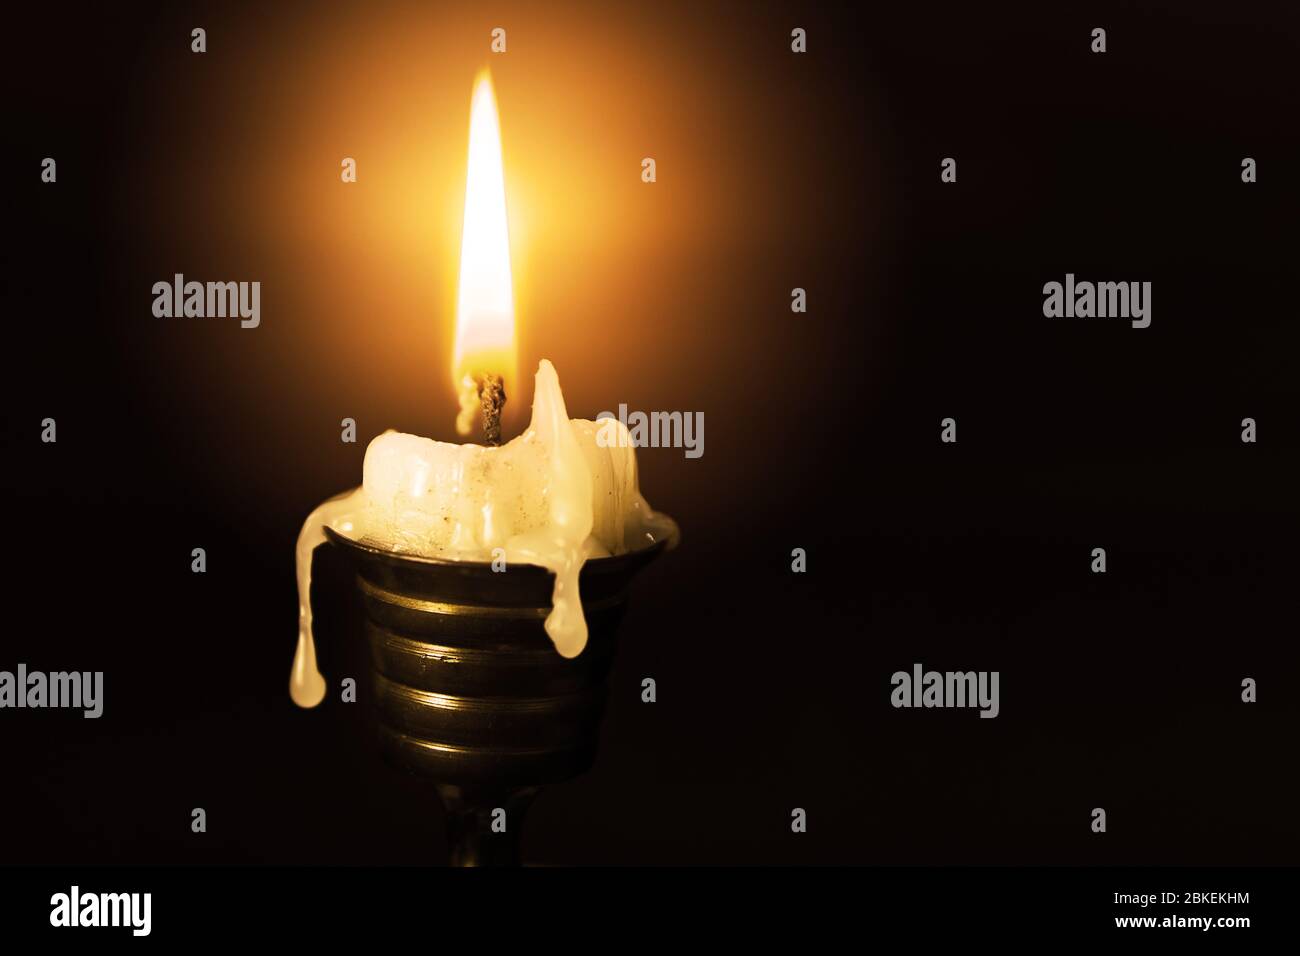 Vela ligera en el candelabro de latón primer plano sobre un fondo oscuro con un espacio de texto Foto de stock